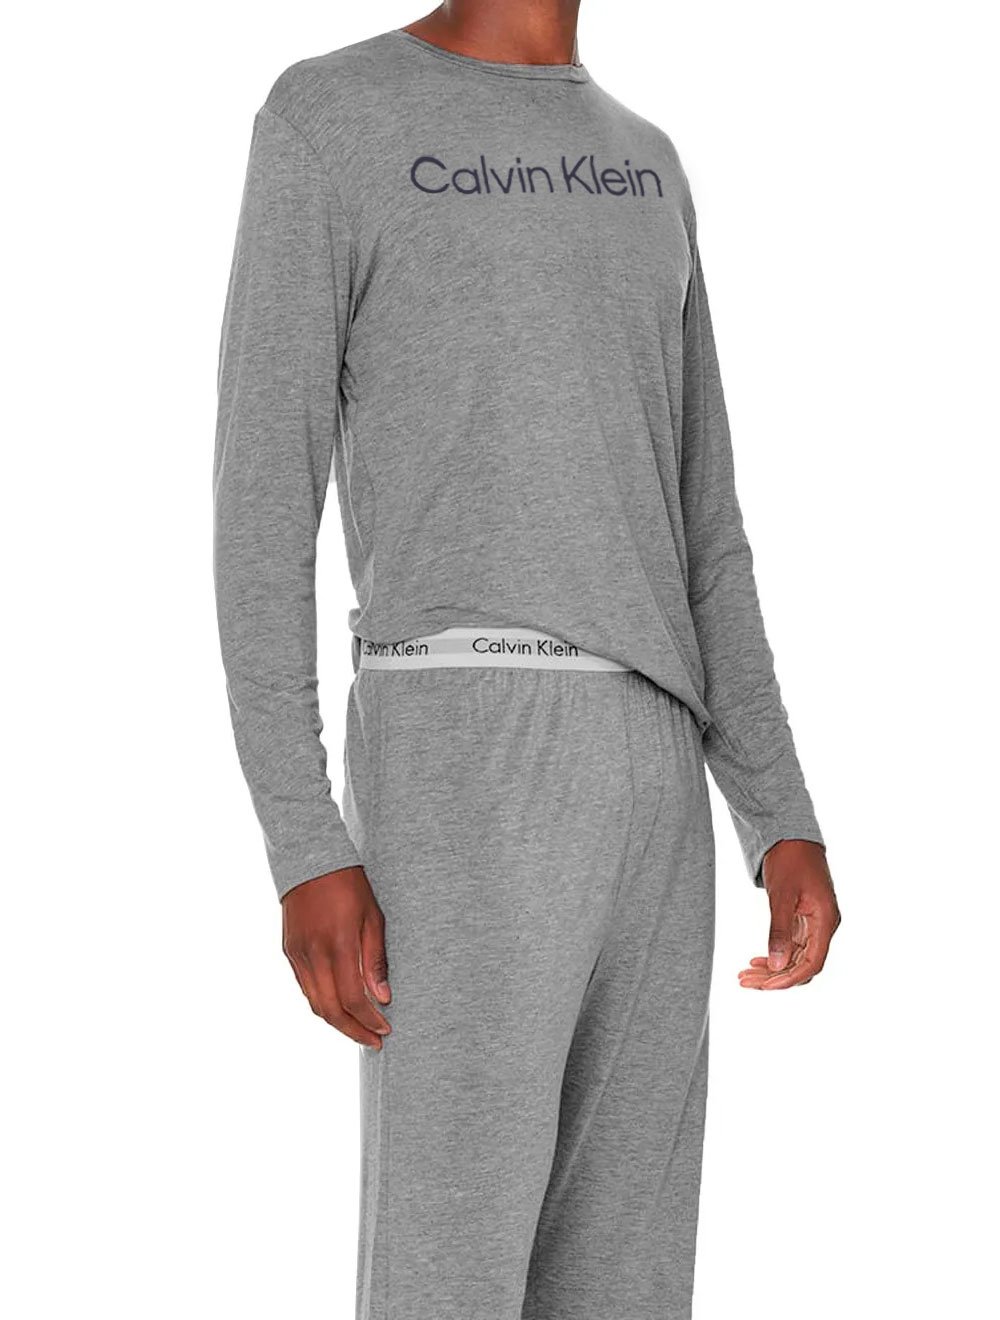 Pijama Calvin Klein Masculino Manga Longa Calça Viscolight Cinza Mescla